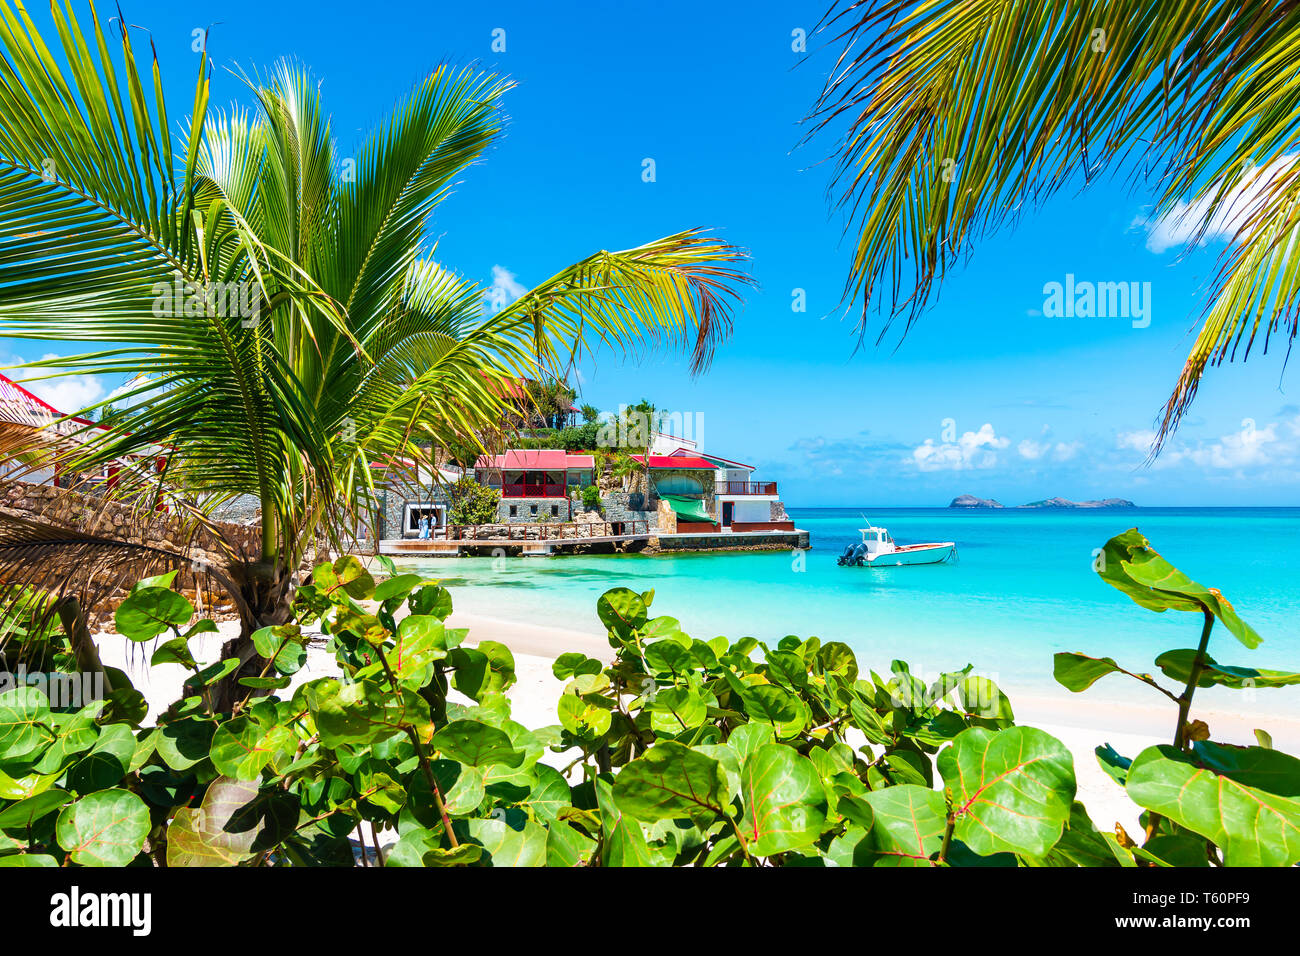 Palm trees on tropical beach, St Barths, Caribbean Island. Stock Photo